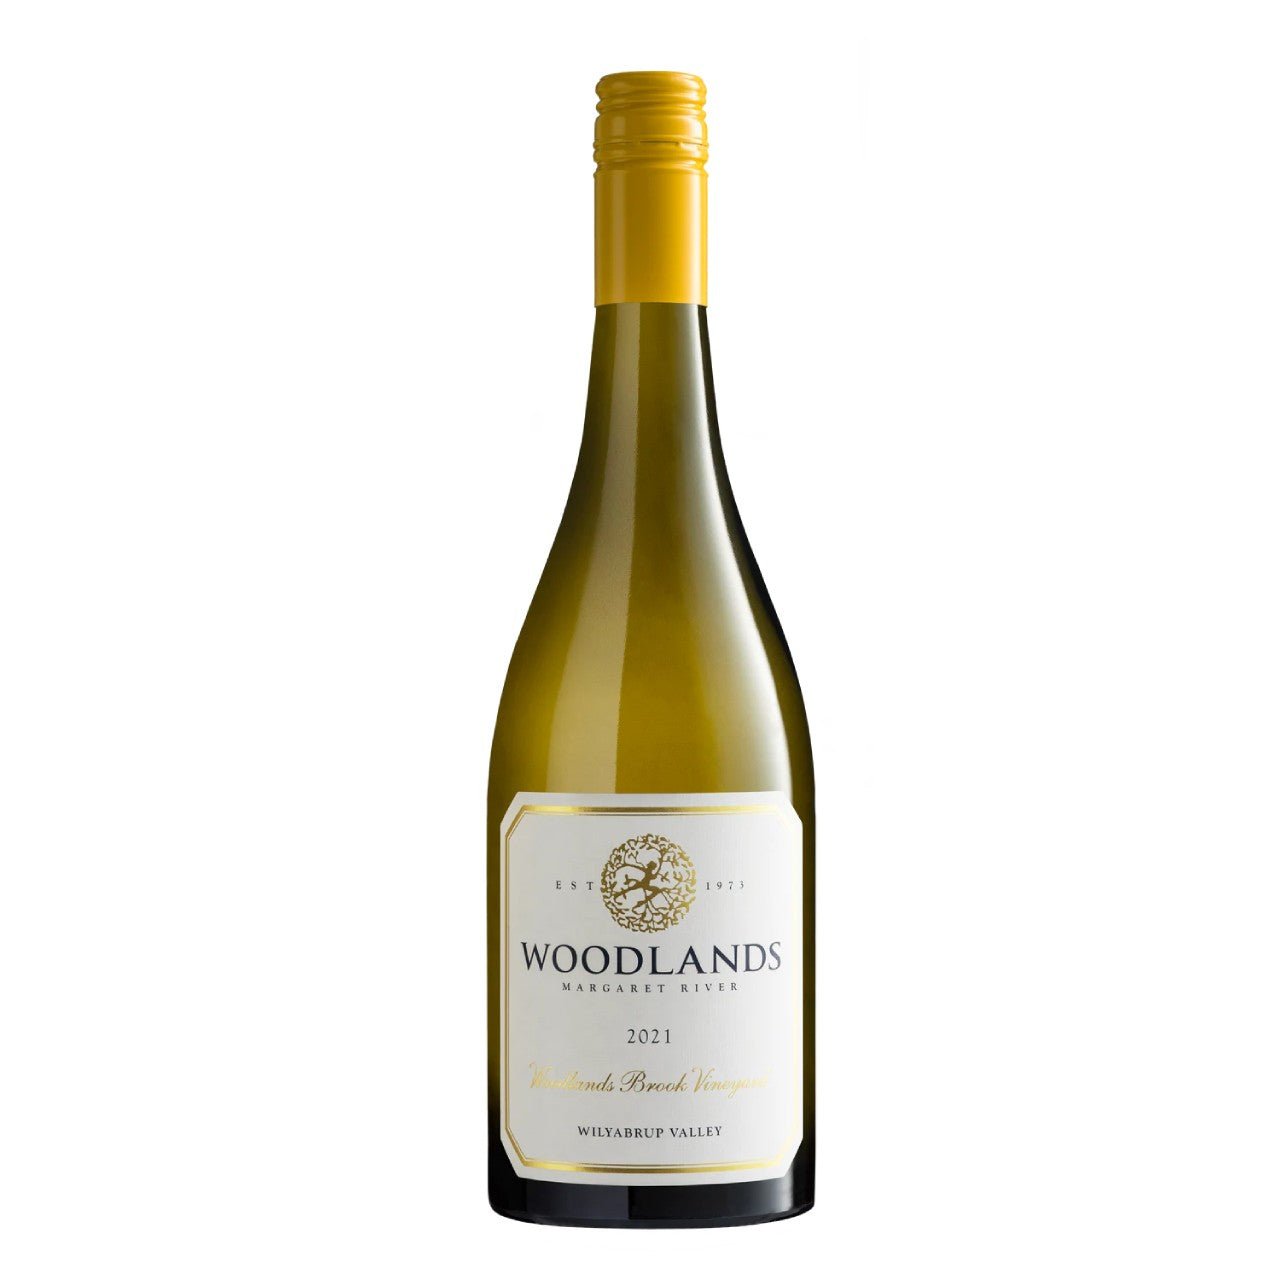 Woodlands Brook Vineyard Chardonnay 2021 - Wine Australia White - Liquor Wine Cave